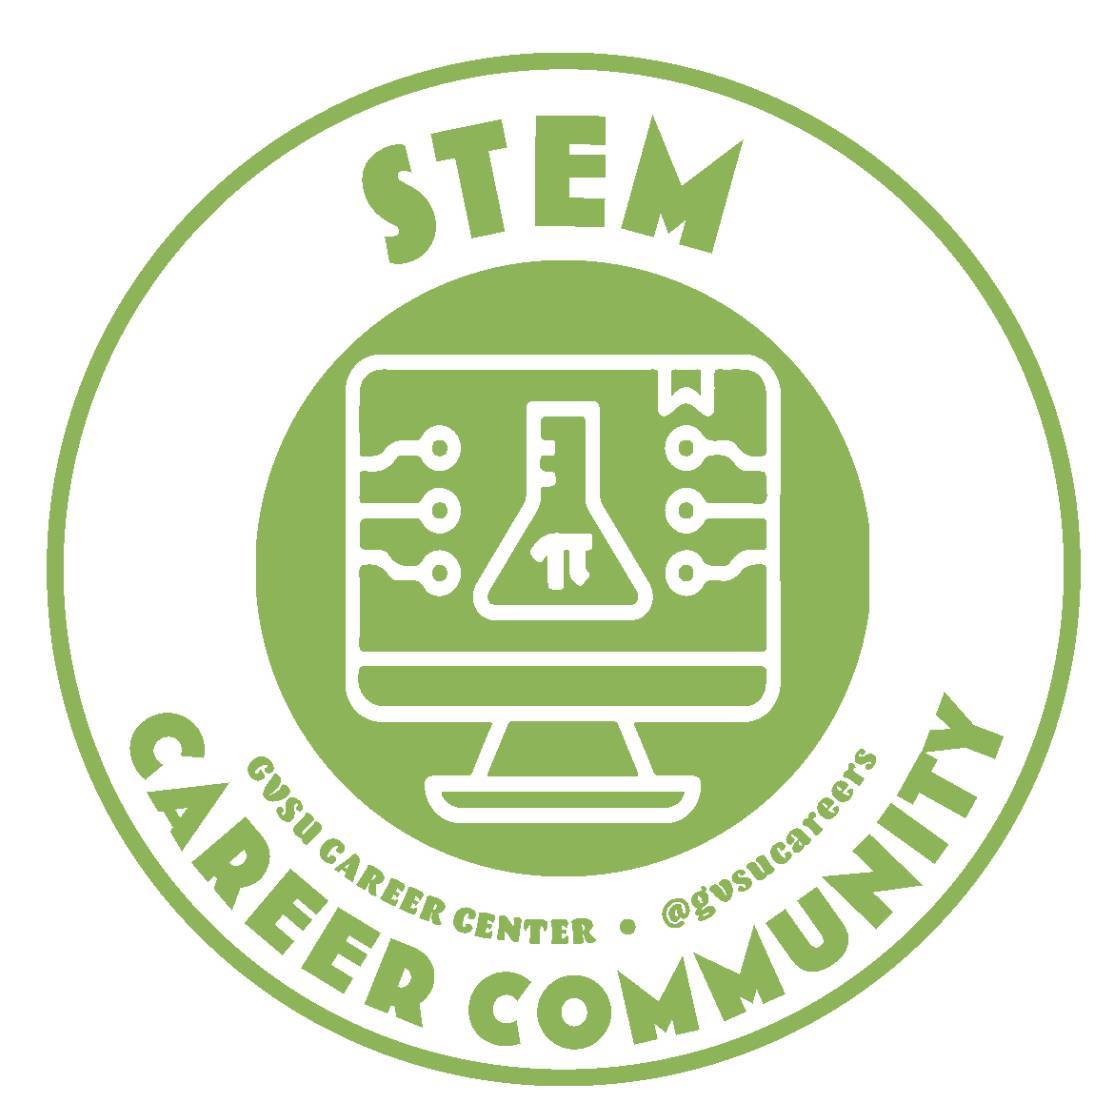 stem career community